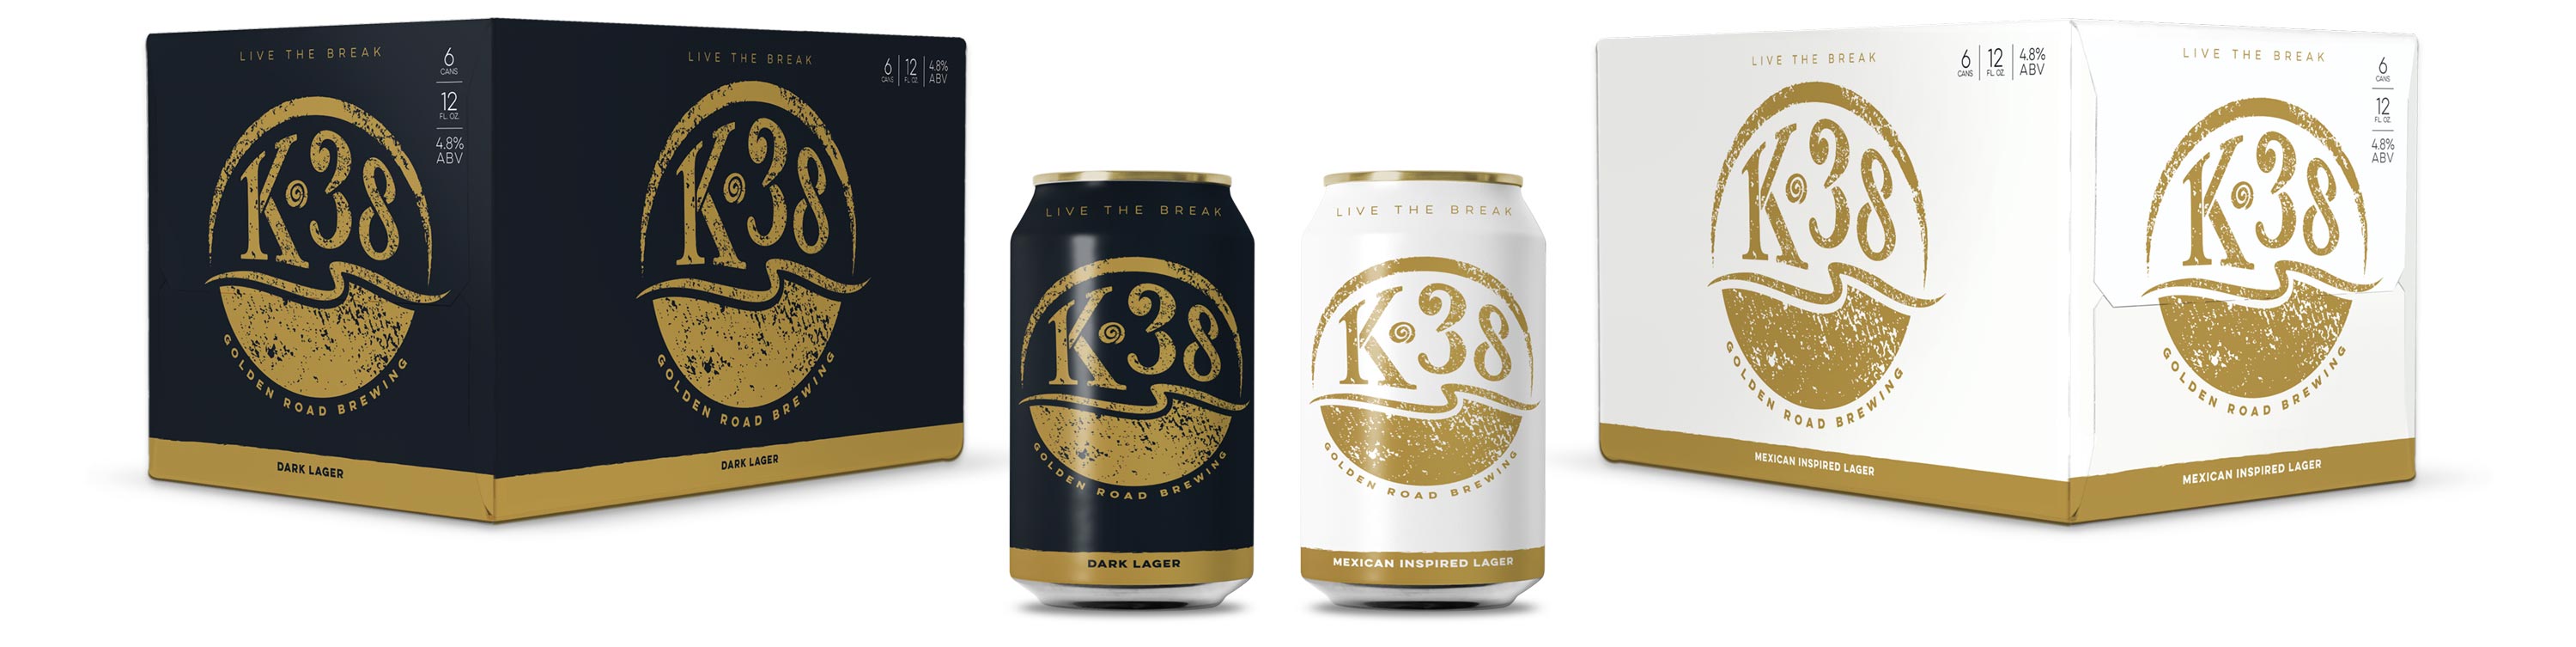 golden road packaging design for K-38 Lagers